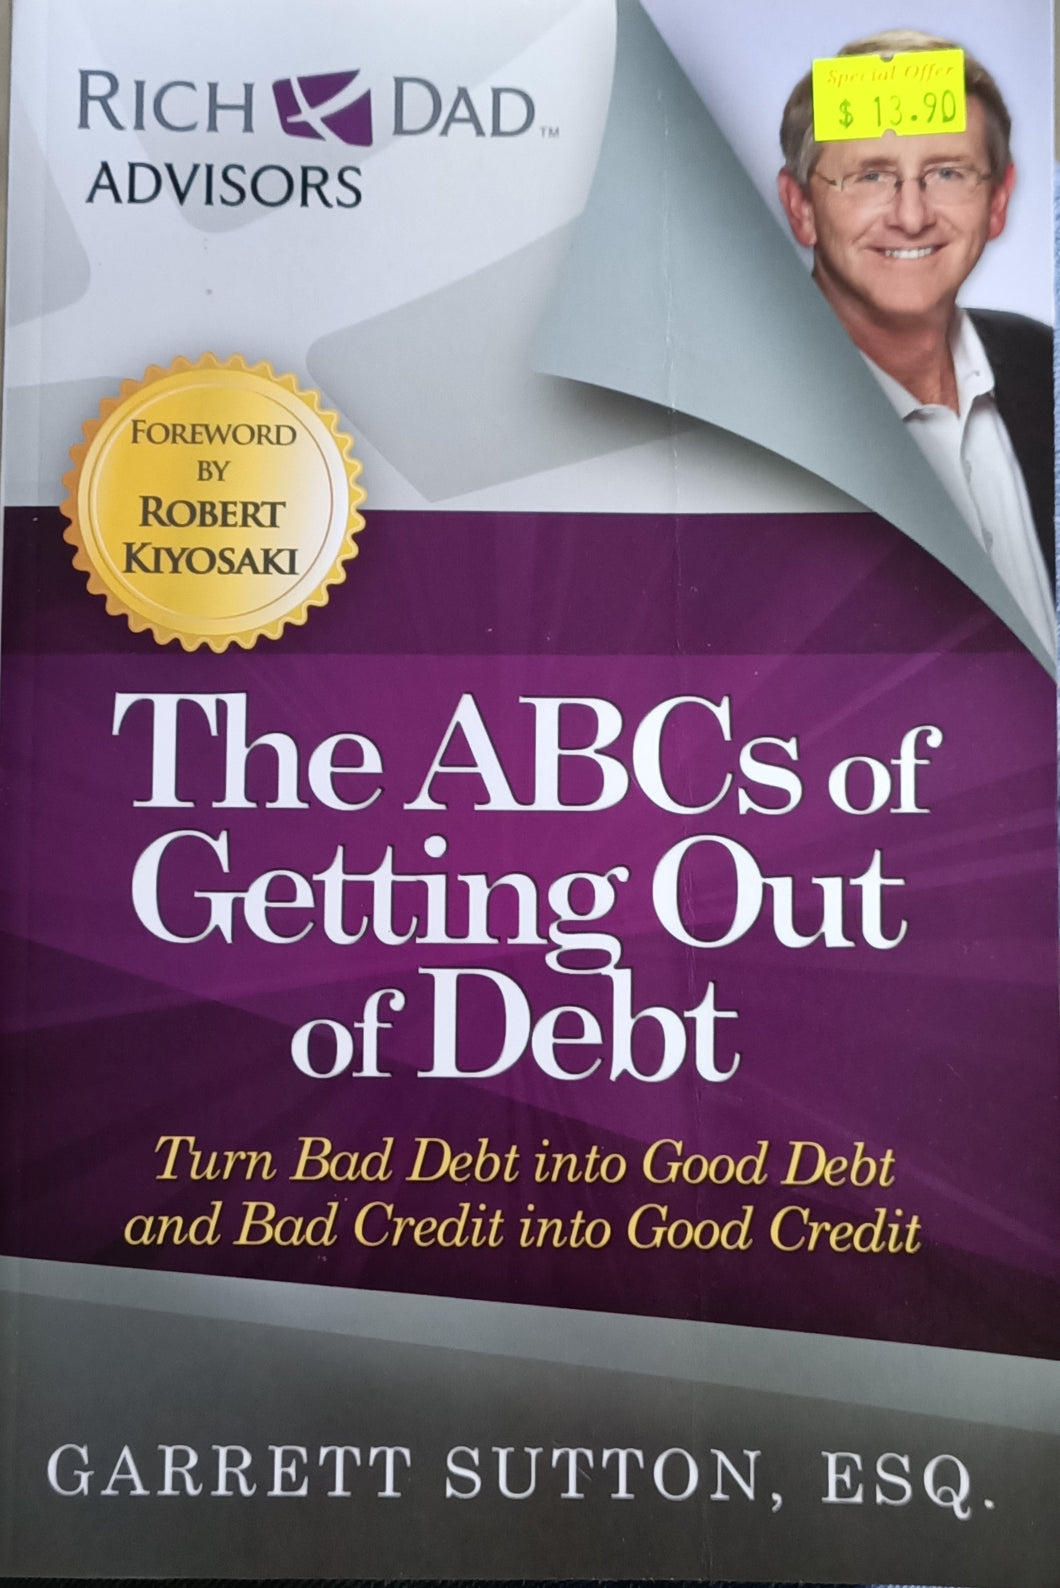 Rich Dad Advisors: The ABCs of Getting Out of Debt - Garrett Sutton, ESQ